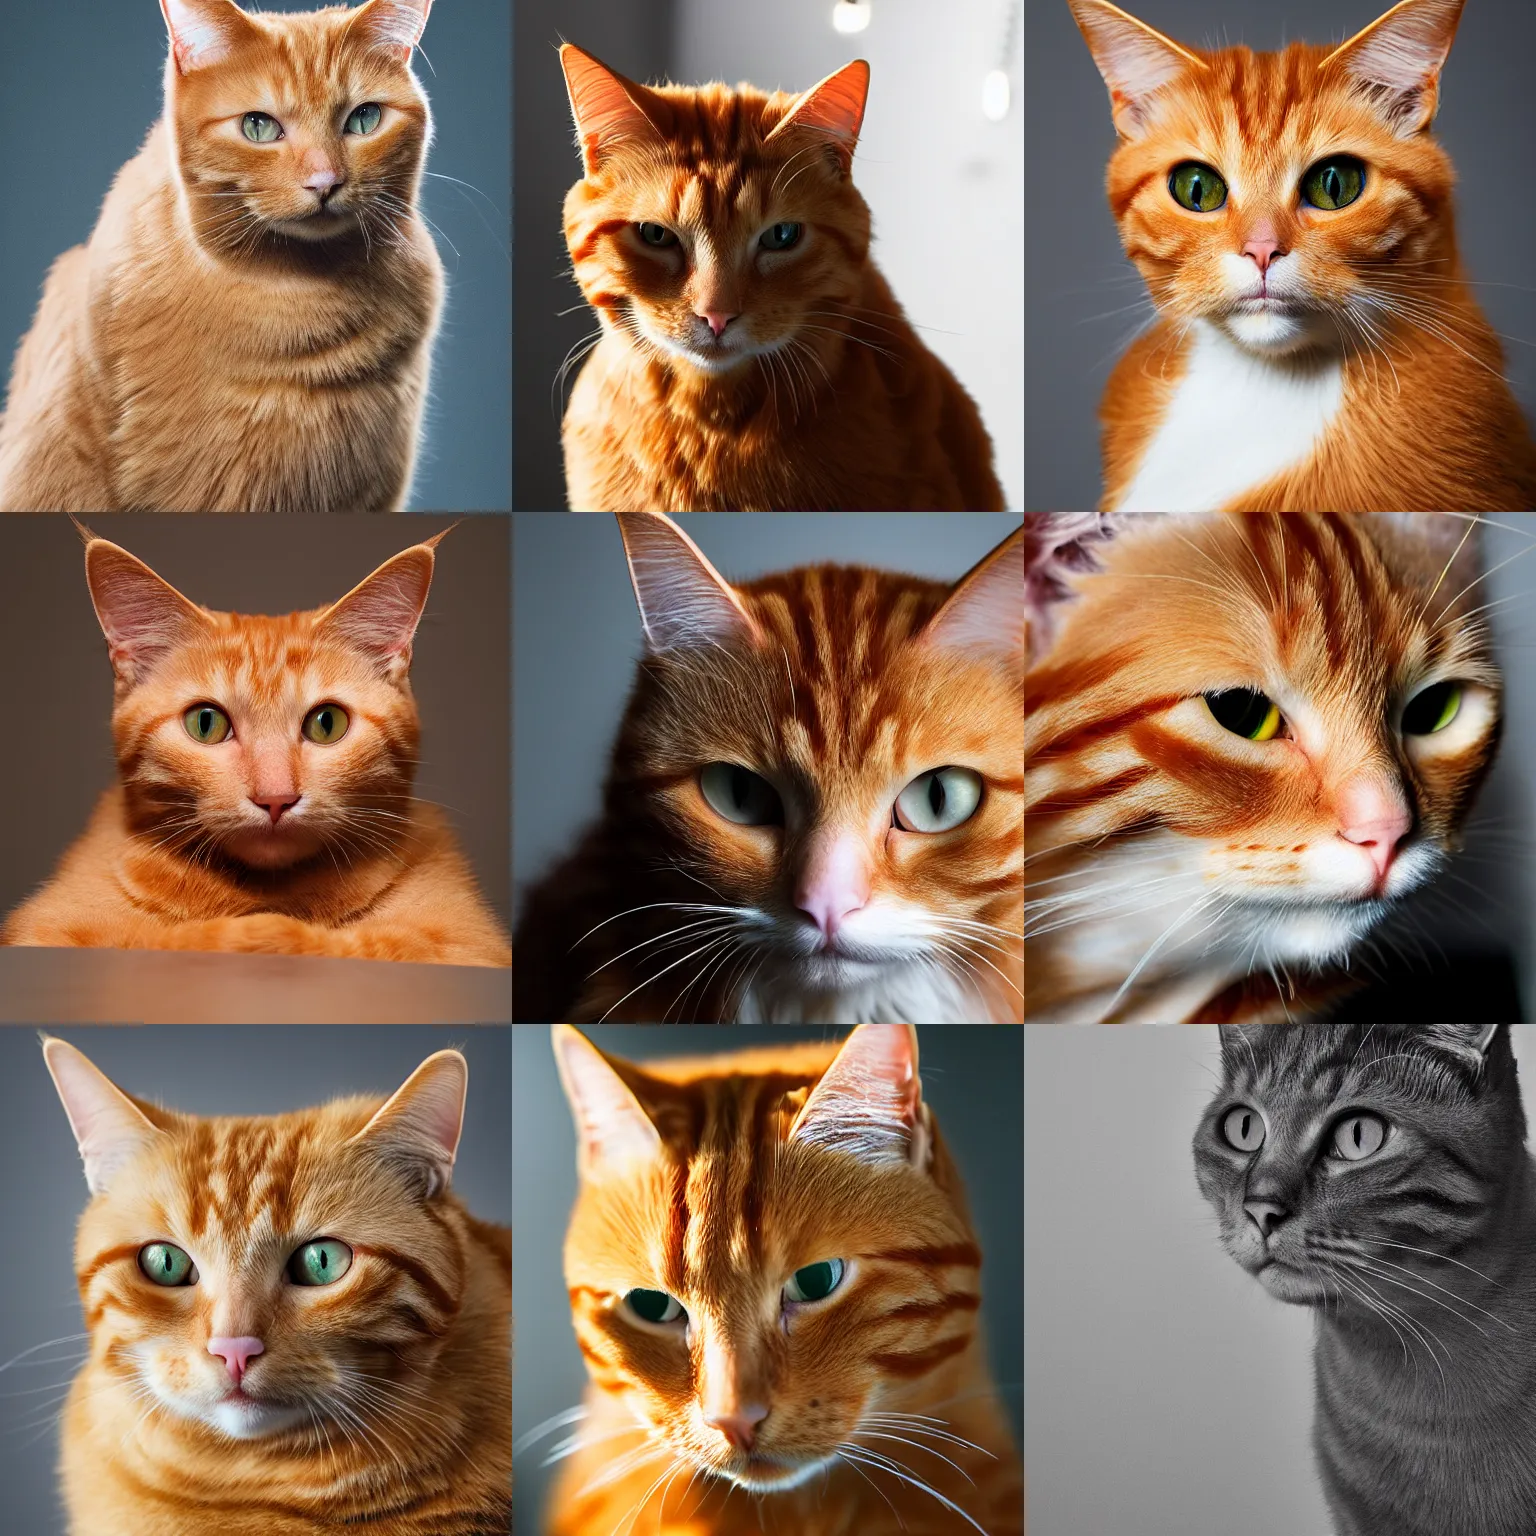 Prompt: ginger cat, studio lighting